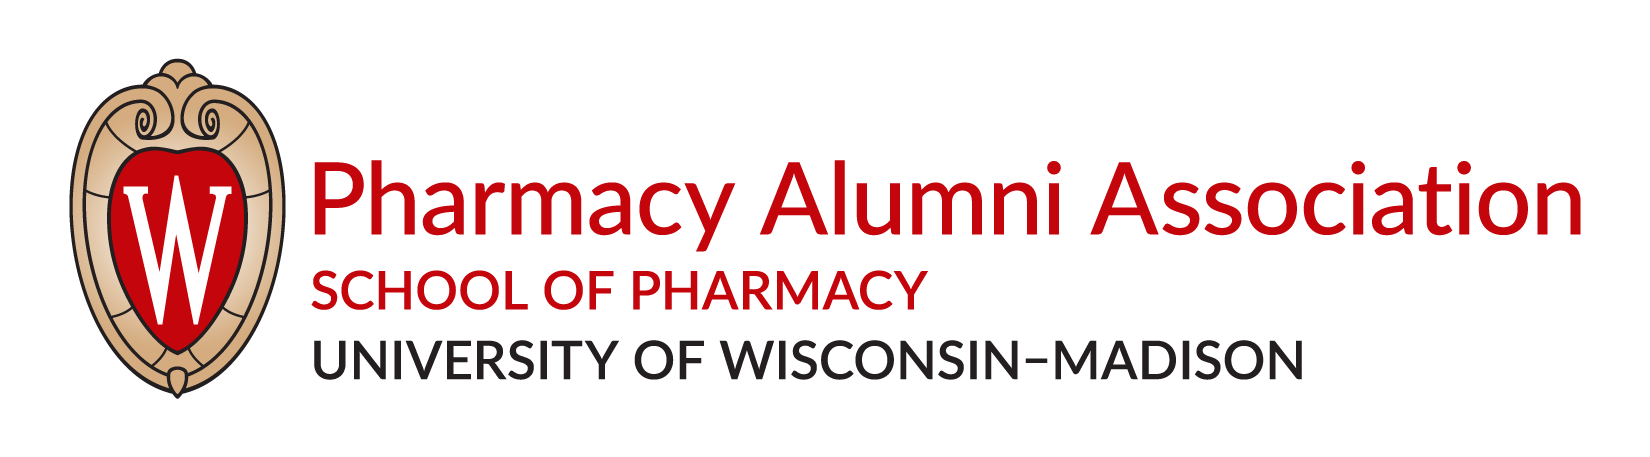 Pharmacy Alumni Association logo